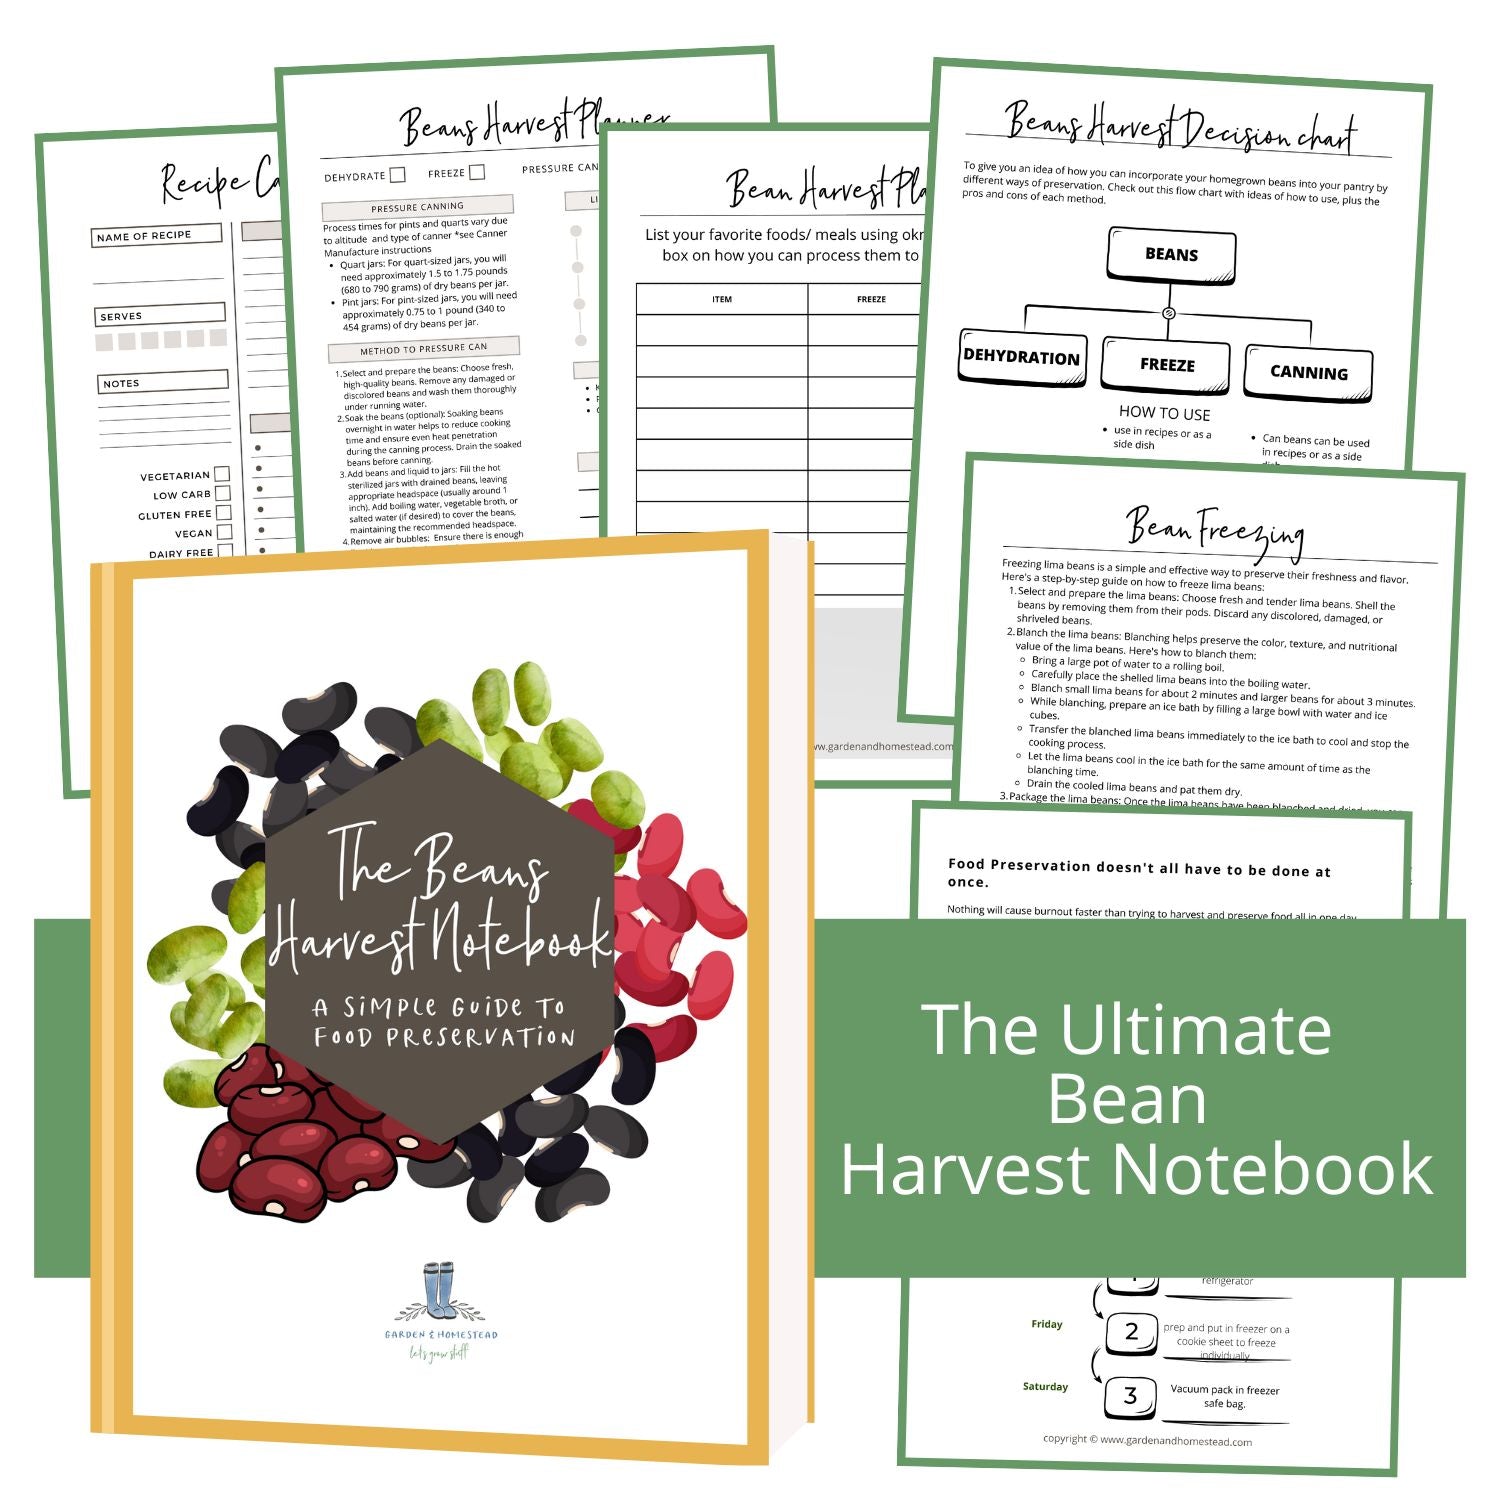 The Bean Harvest Notebook